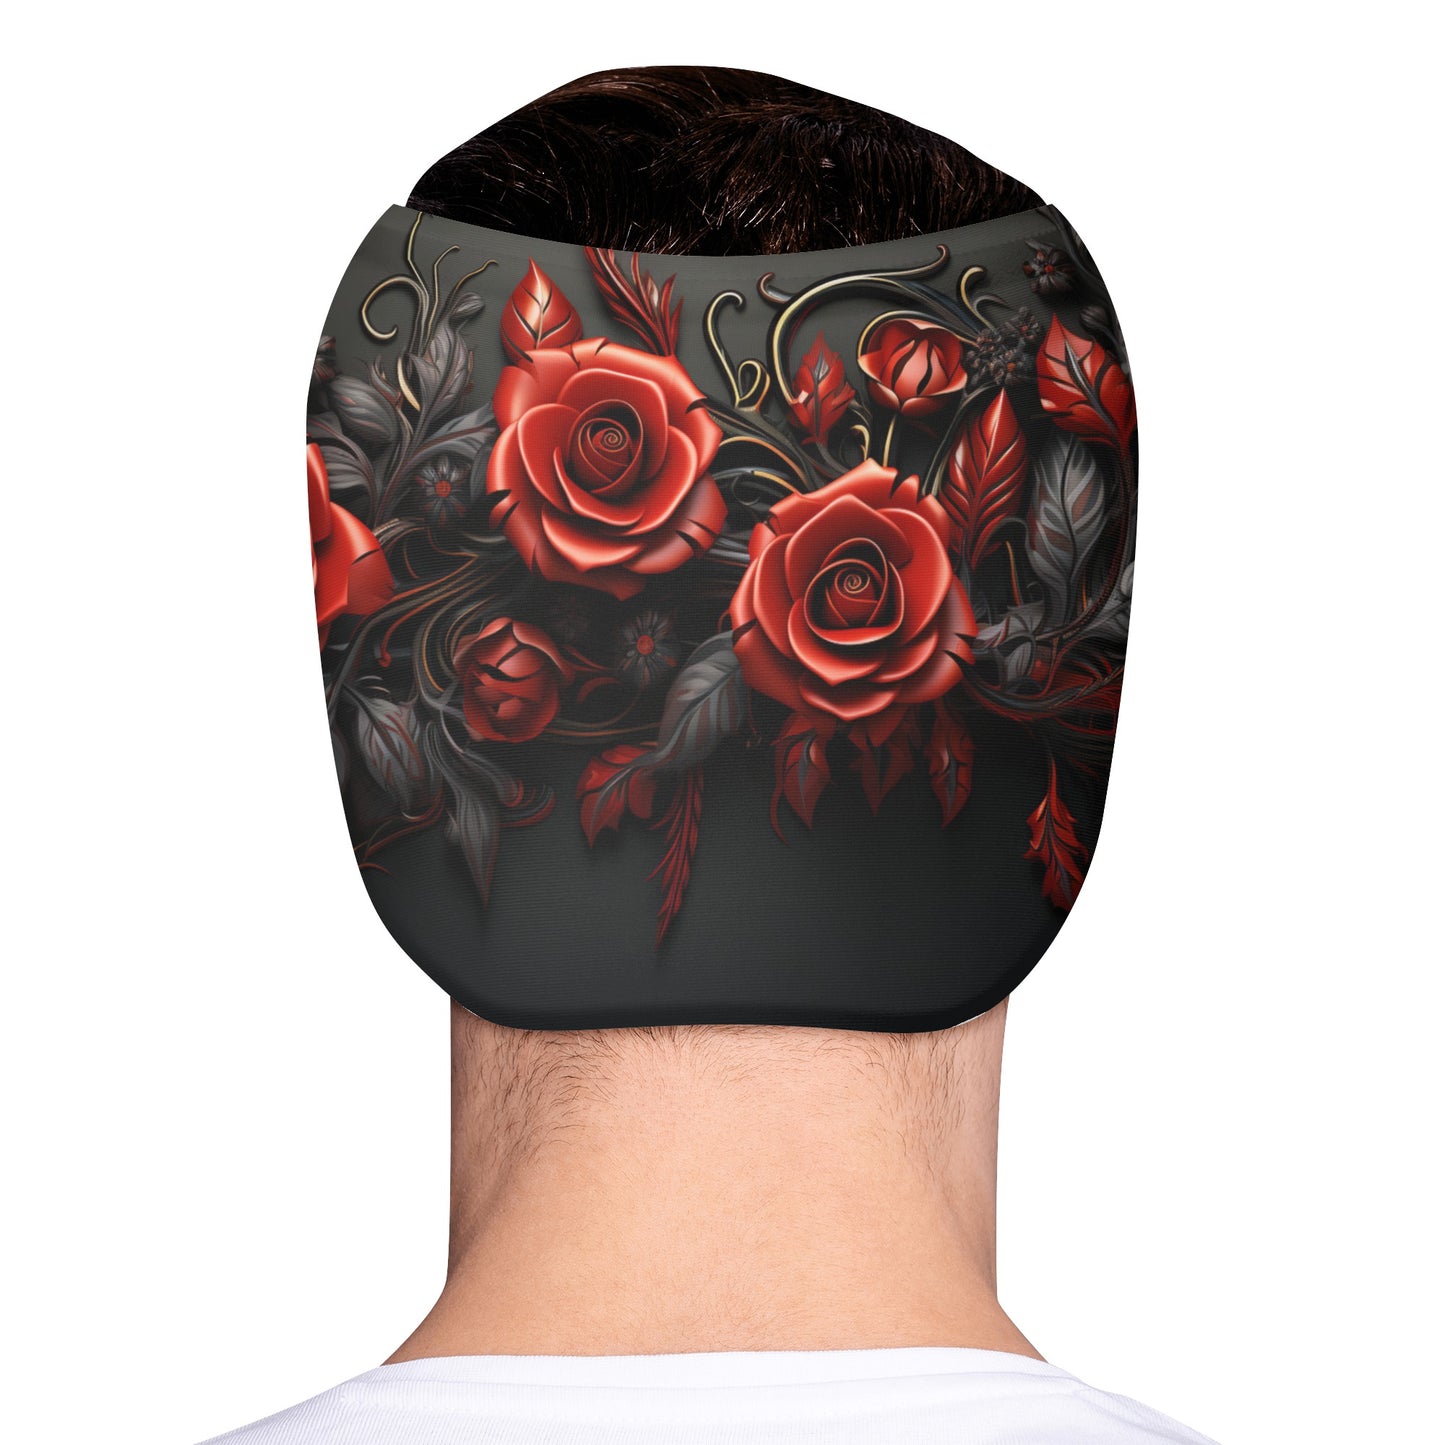 Neduz Designs Rose Print Ice Head Wrap - Adjustable Migraine Relief Compression Hat